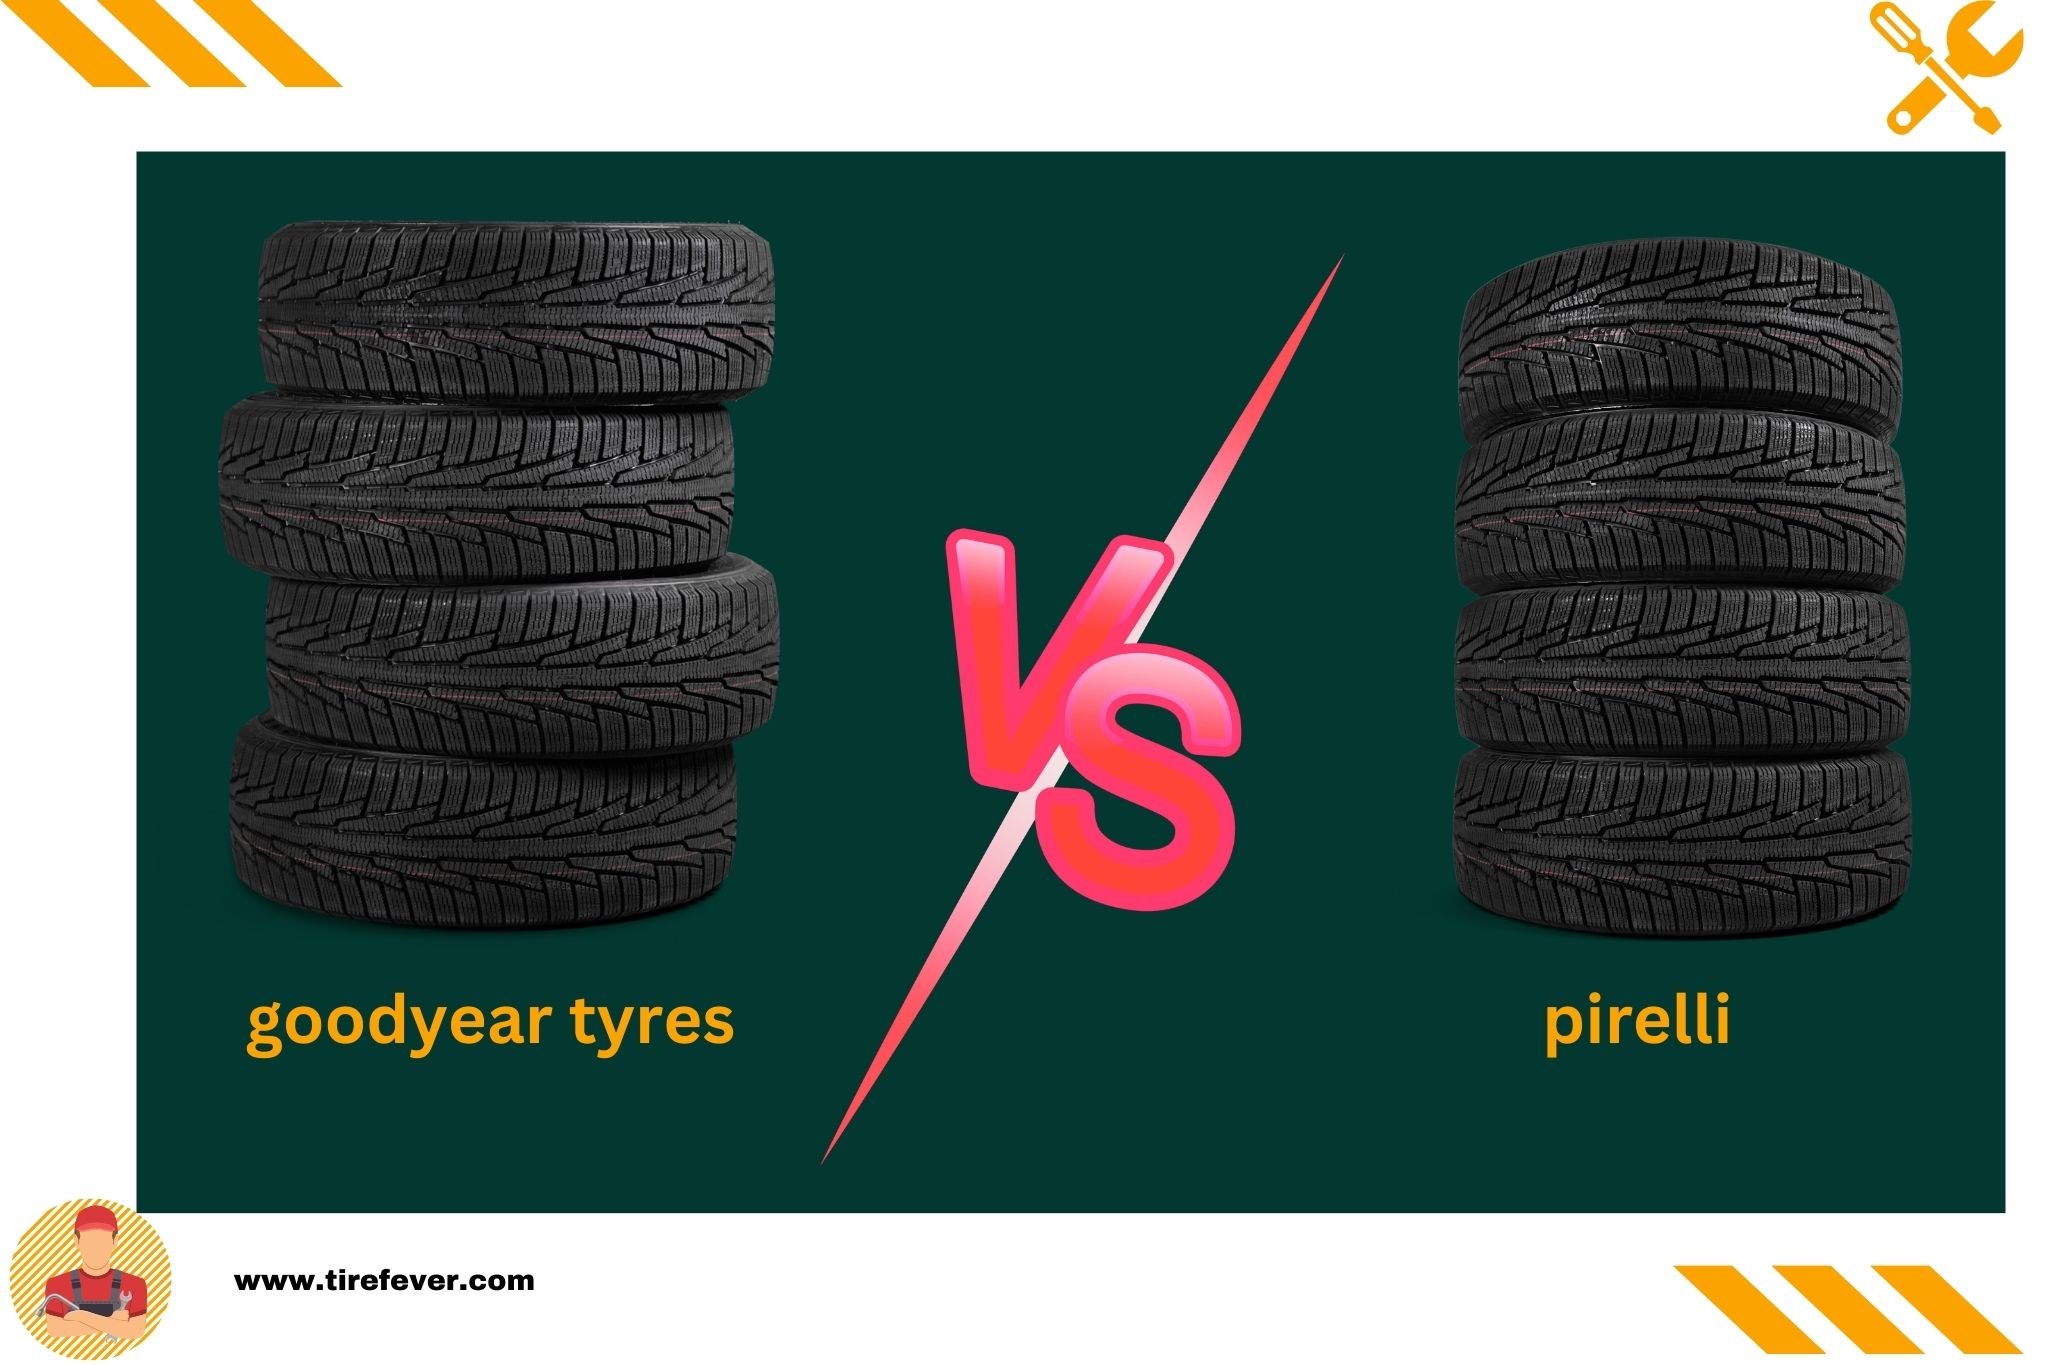 goodyear tyres vs pirelli